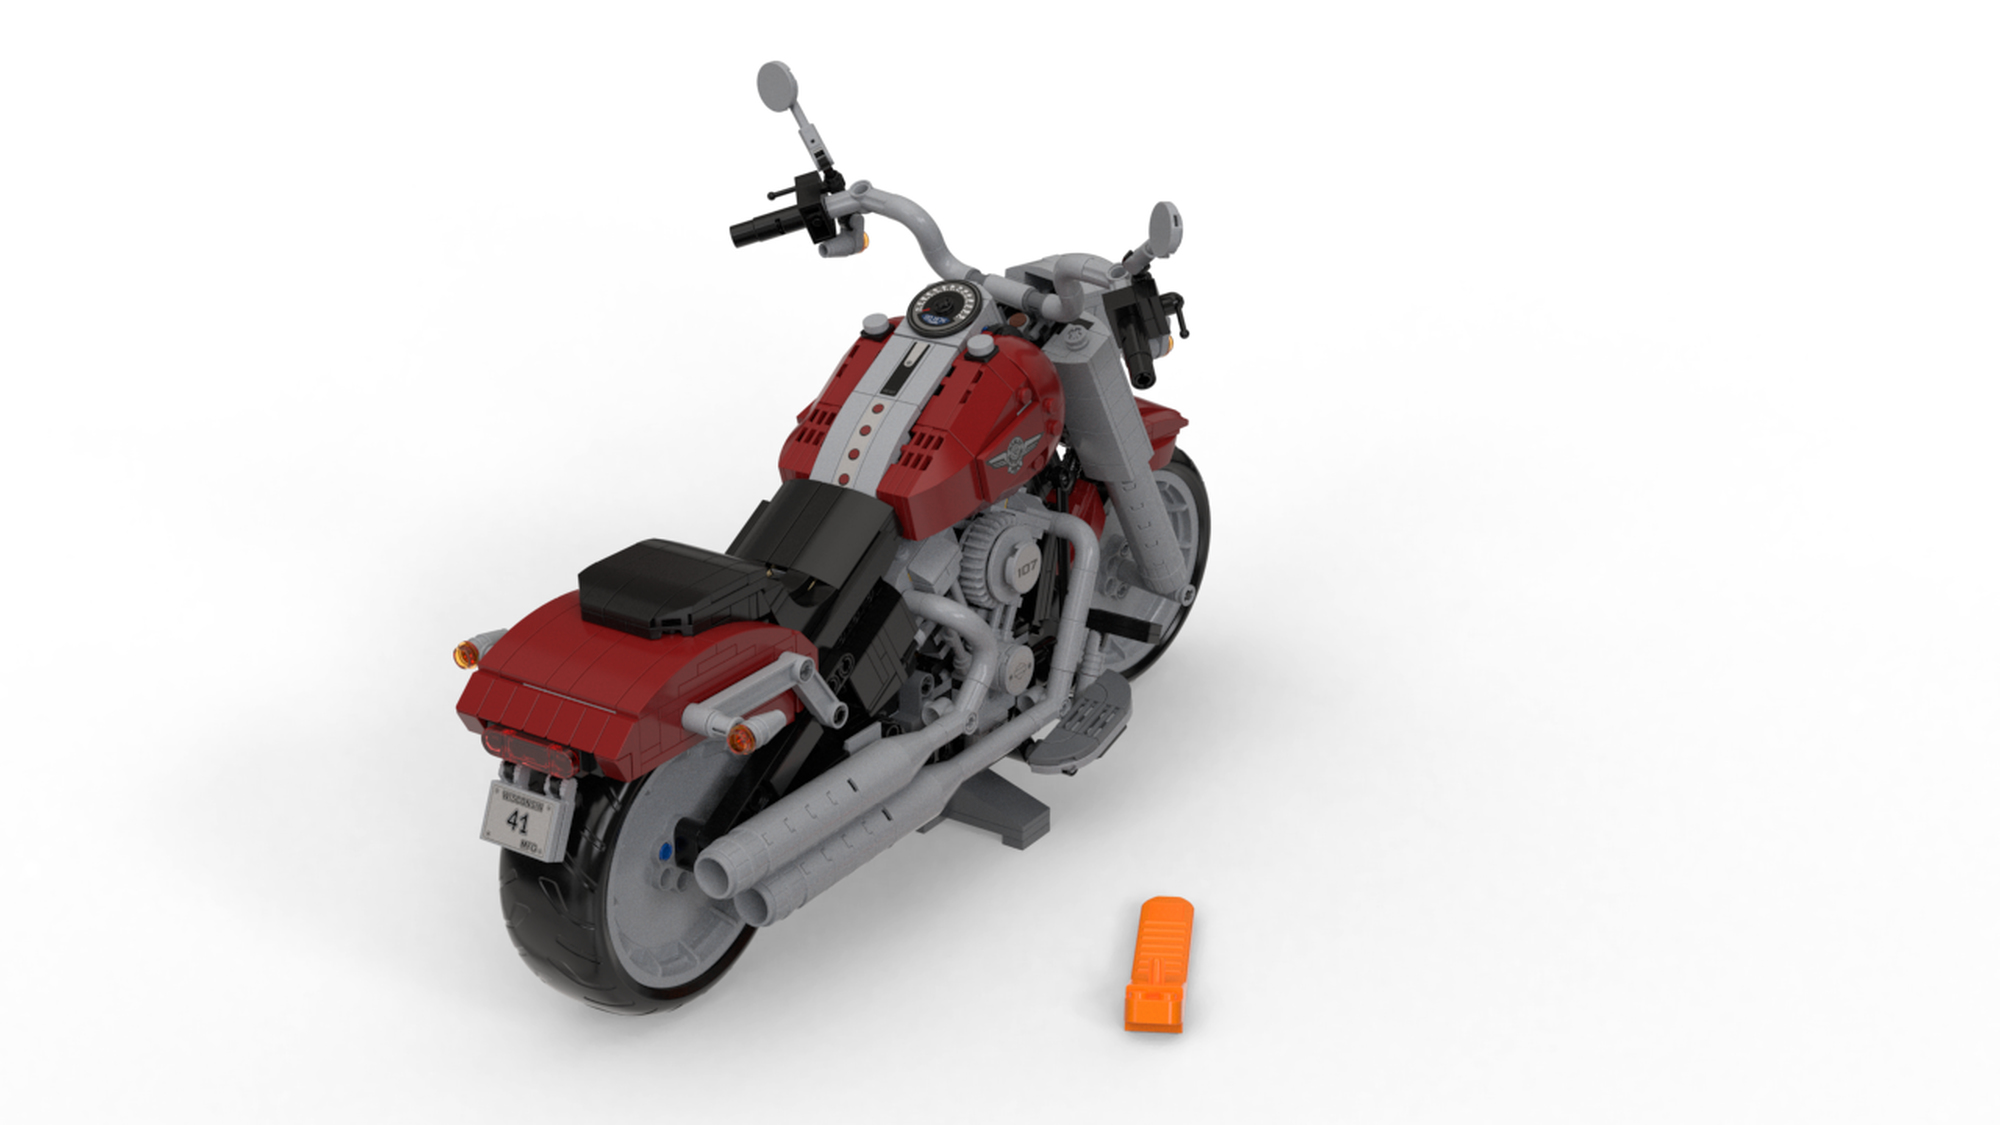 LEGO Creator Expert Harley-Davidson Fat Boy 10269 Building Kit